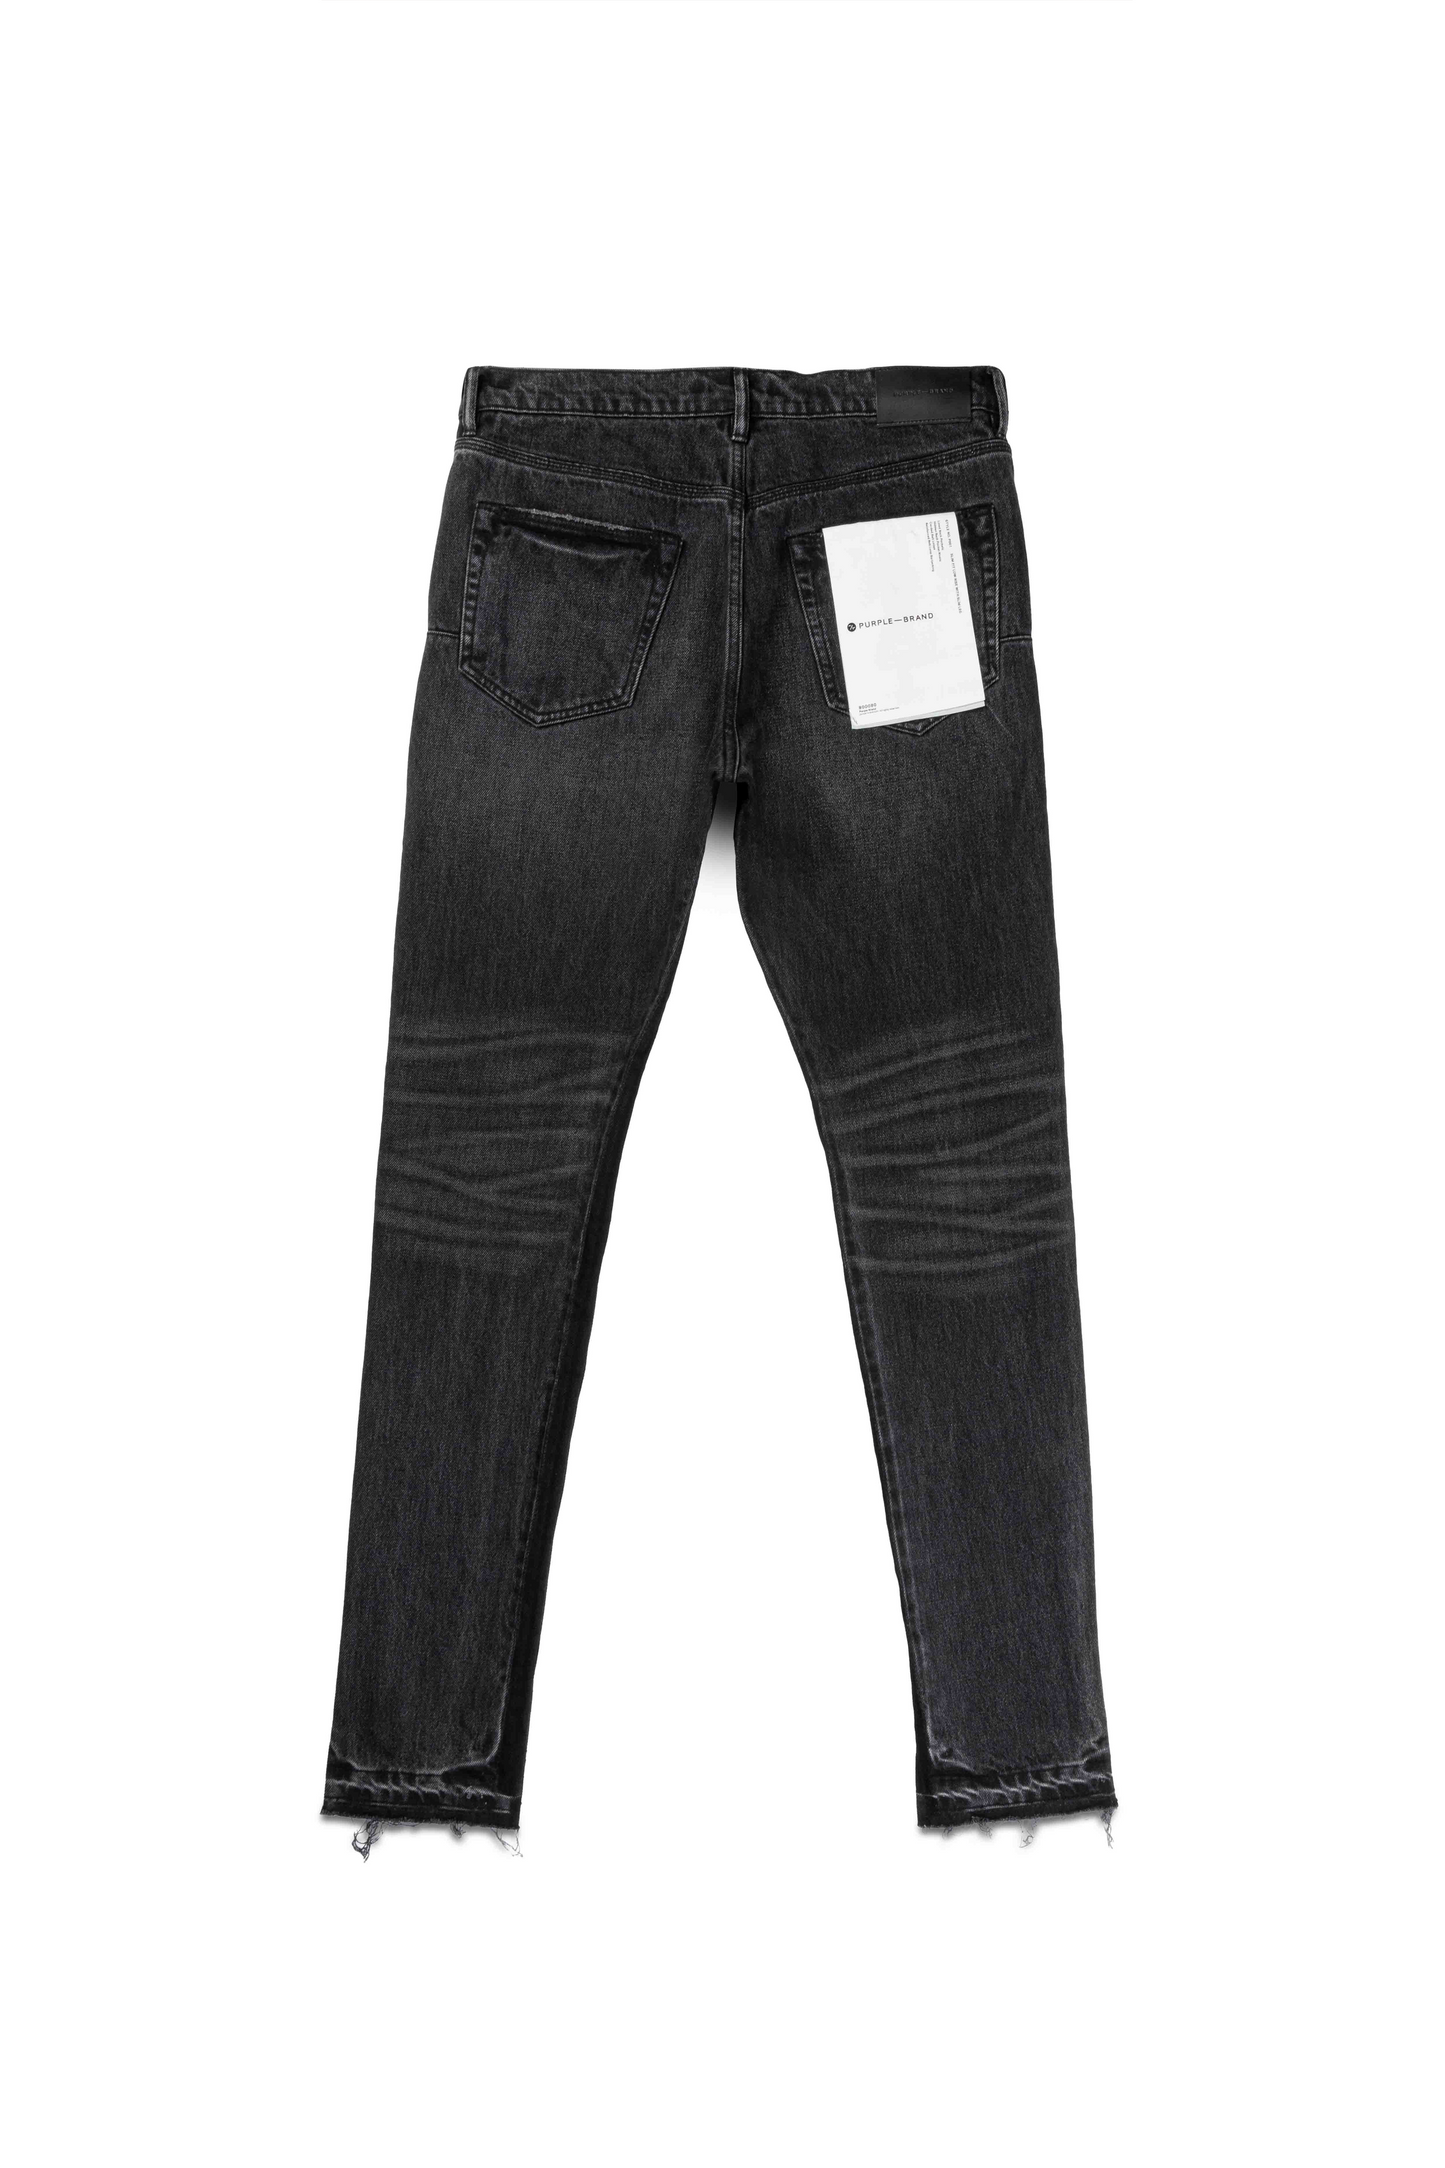 purple-brand-black-distressed-skinny-jeans_20251525_46845133_800.jpg